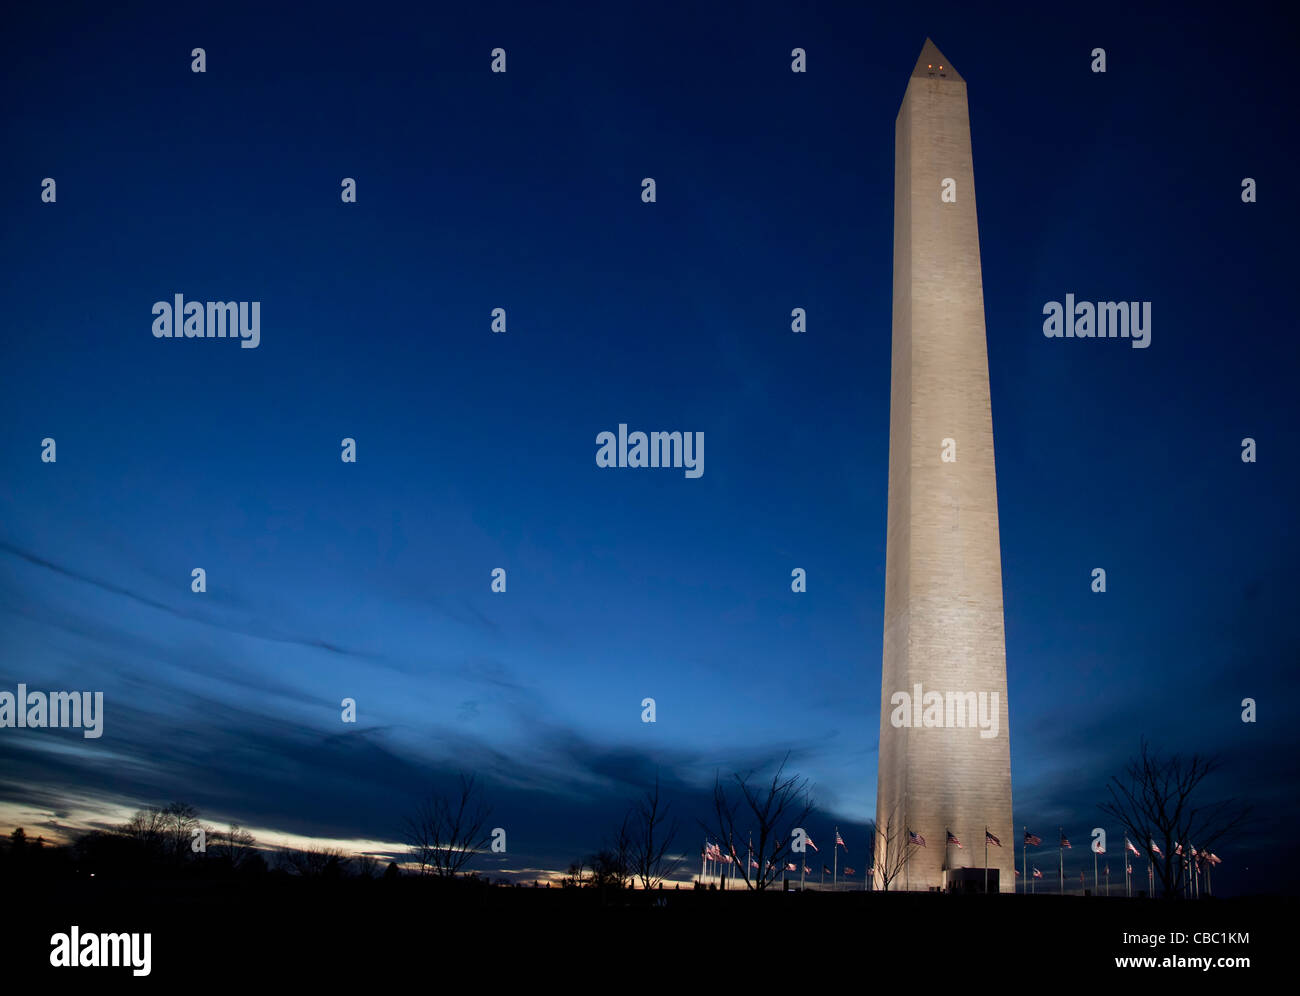 Washington, DC - The Washington Monument. Stock Photo